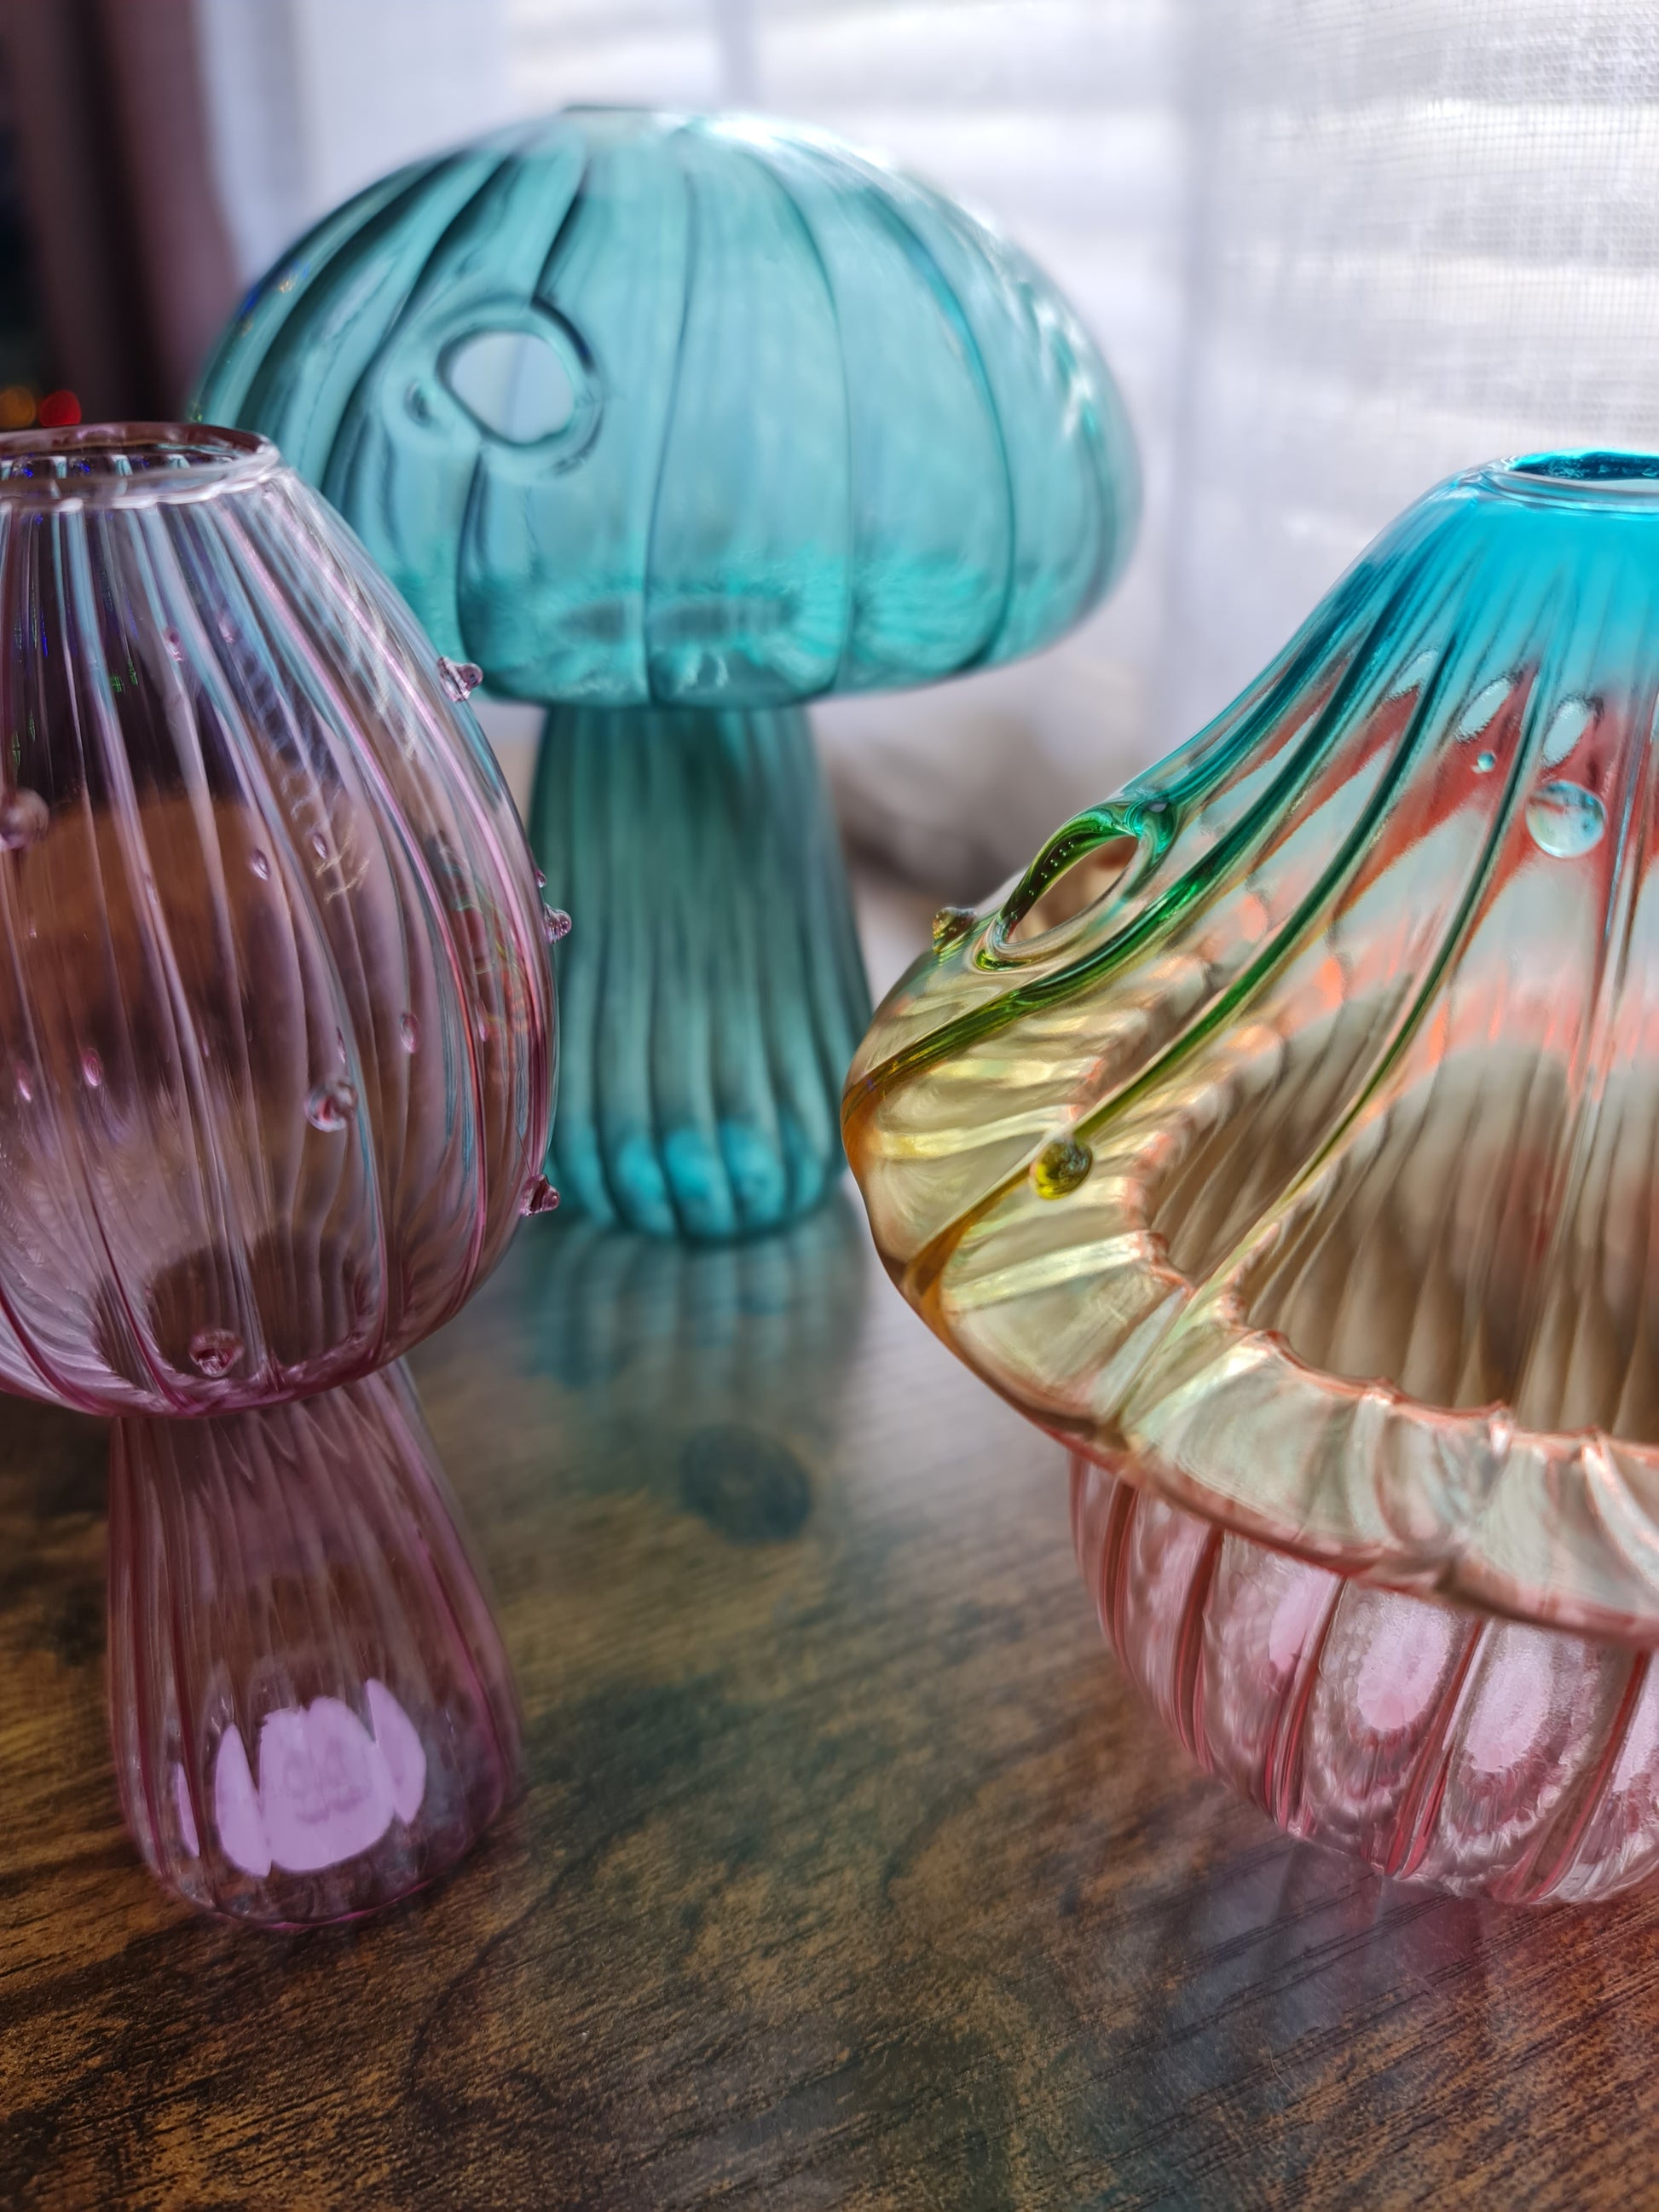 Vase Glass Assorted